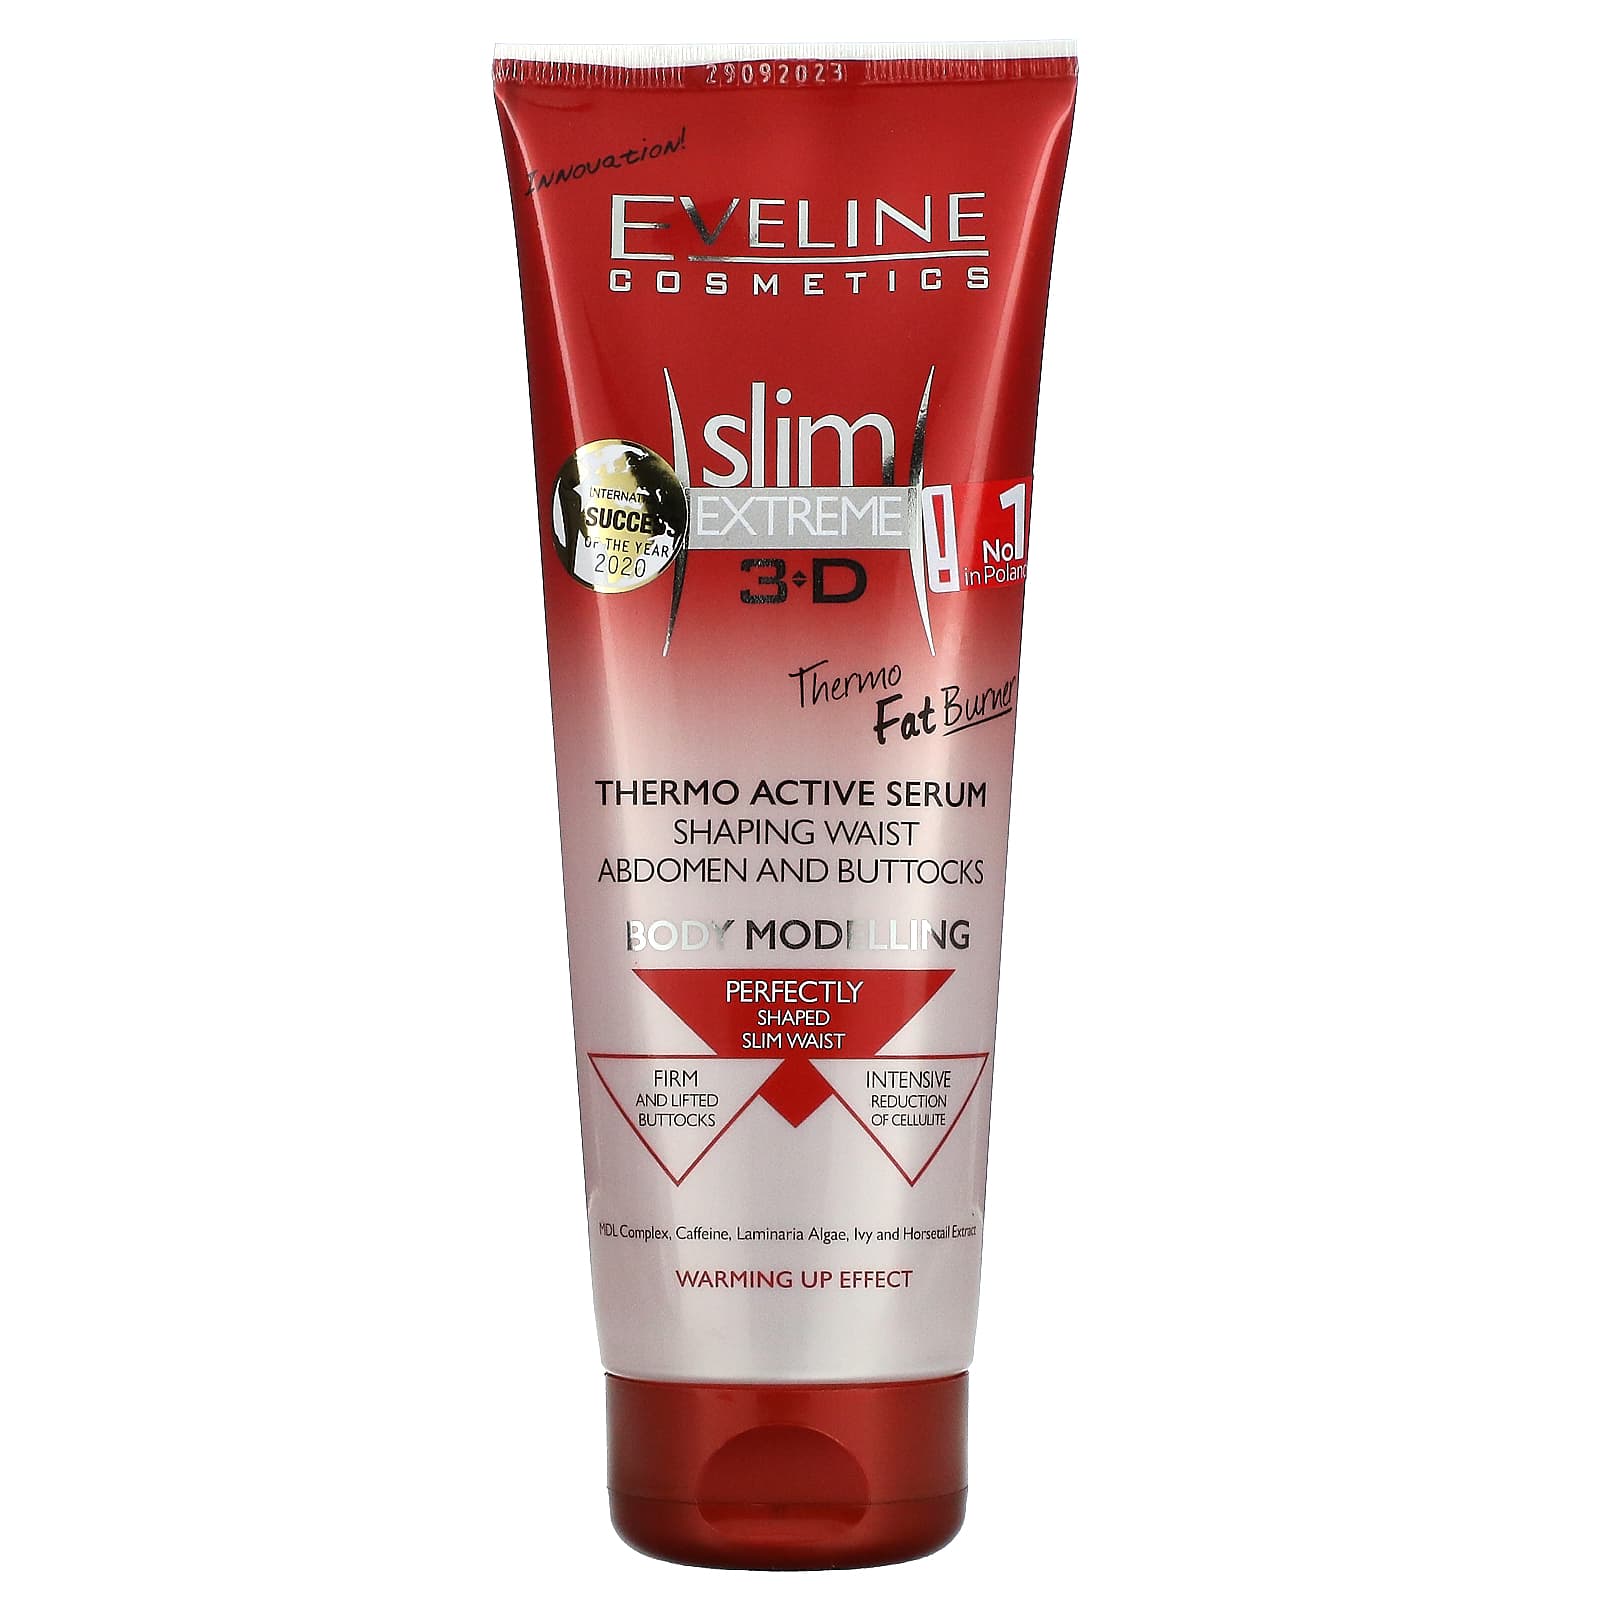 Eveline Cosmetics Slim Extreme 3d Thermo Active Serum 8 8 Fl Oz 250 Ml